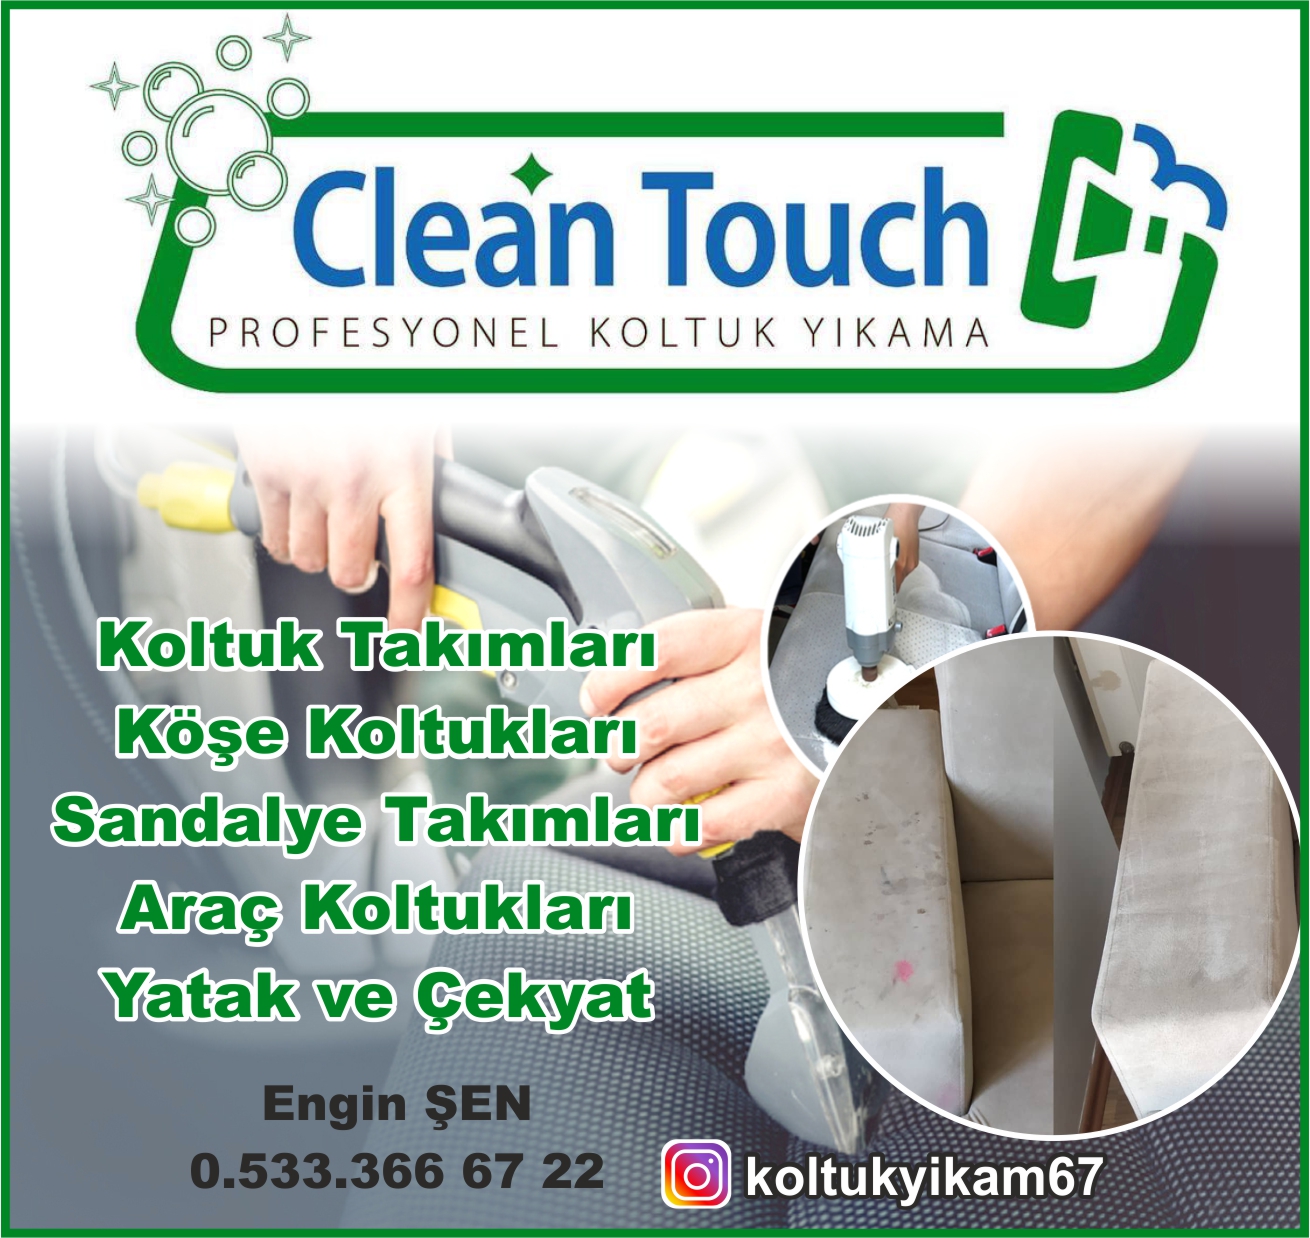 Clean Touch Koltuk Yıkama Kdz.Ereğli